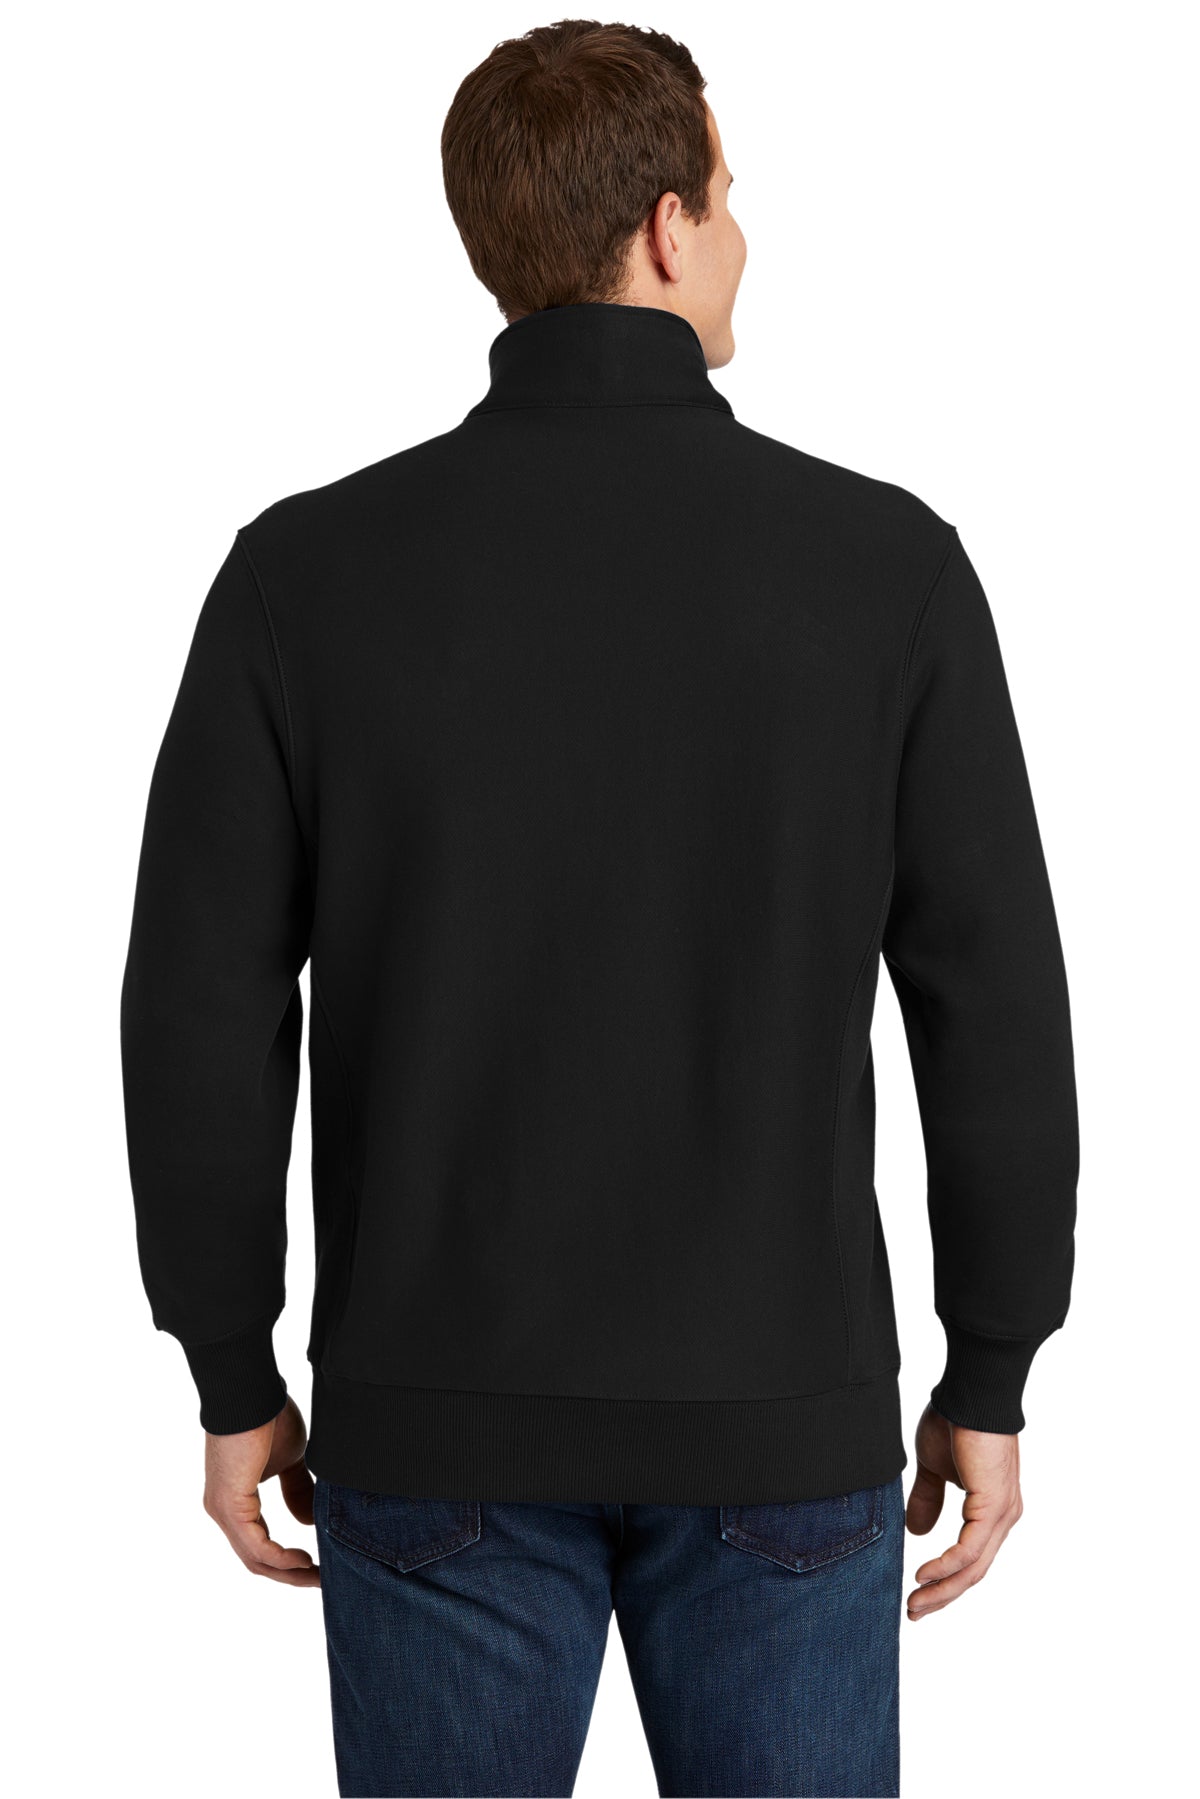 sport-tek_st283 _black_company_logo_sweatshirts